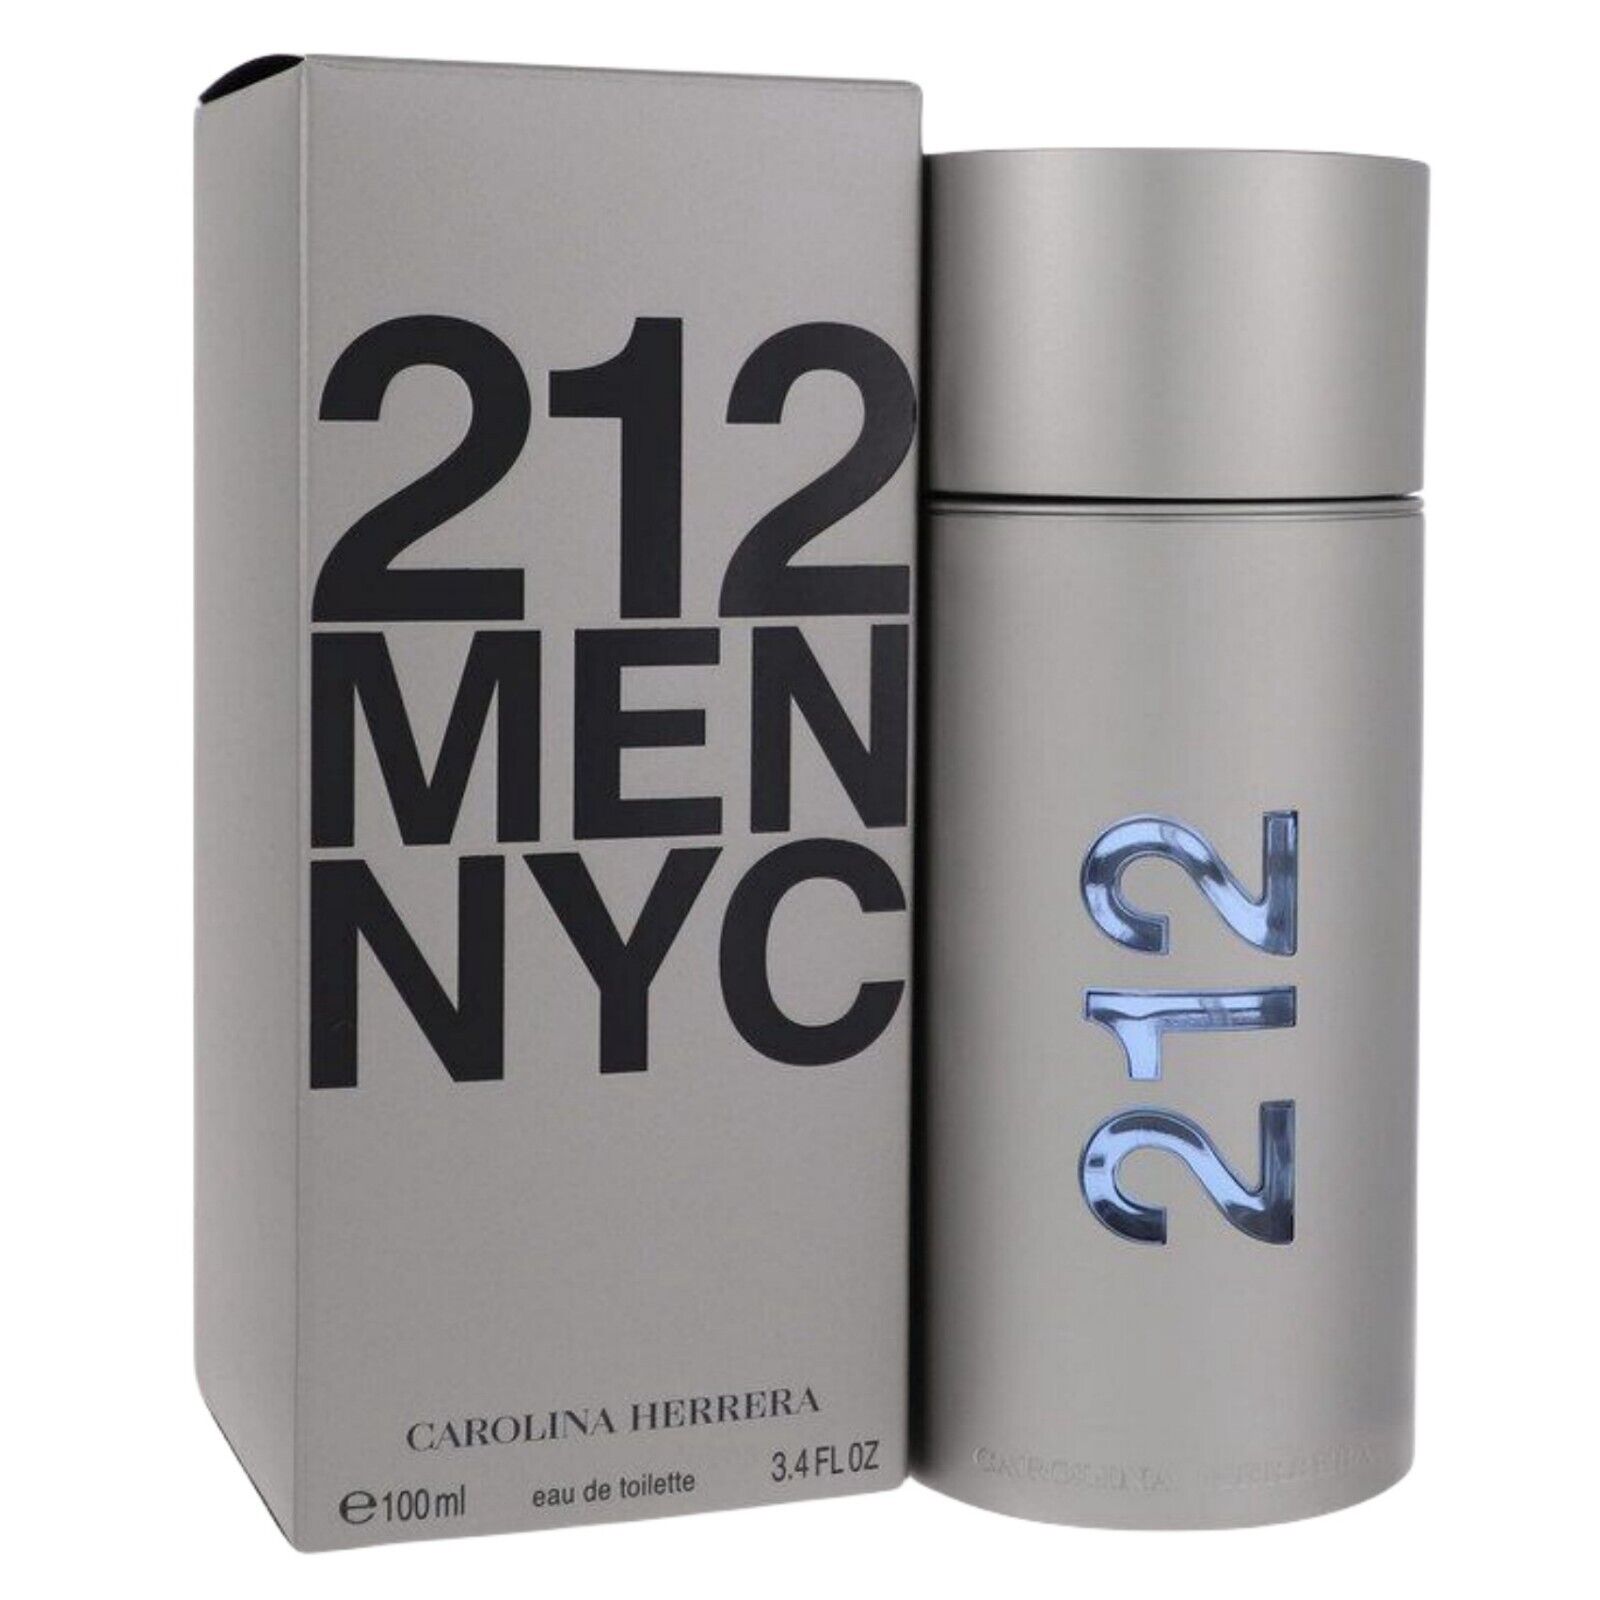 New 212 Men By Ca.ro.lina He.rre.ra For Men NYC 3.4Oz 100ml EDT Spray